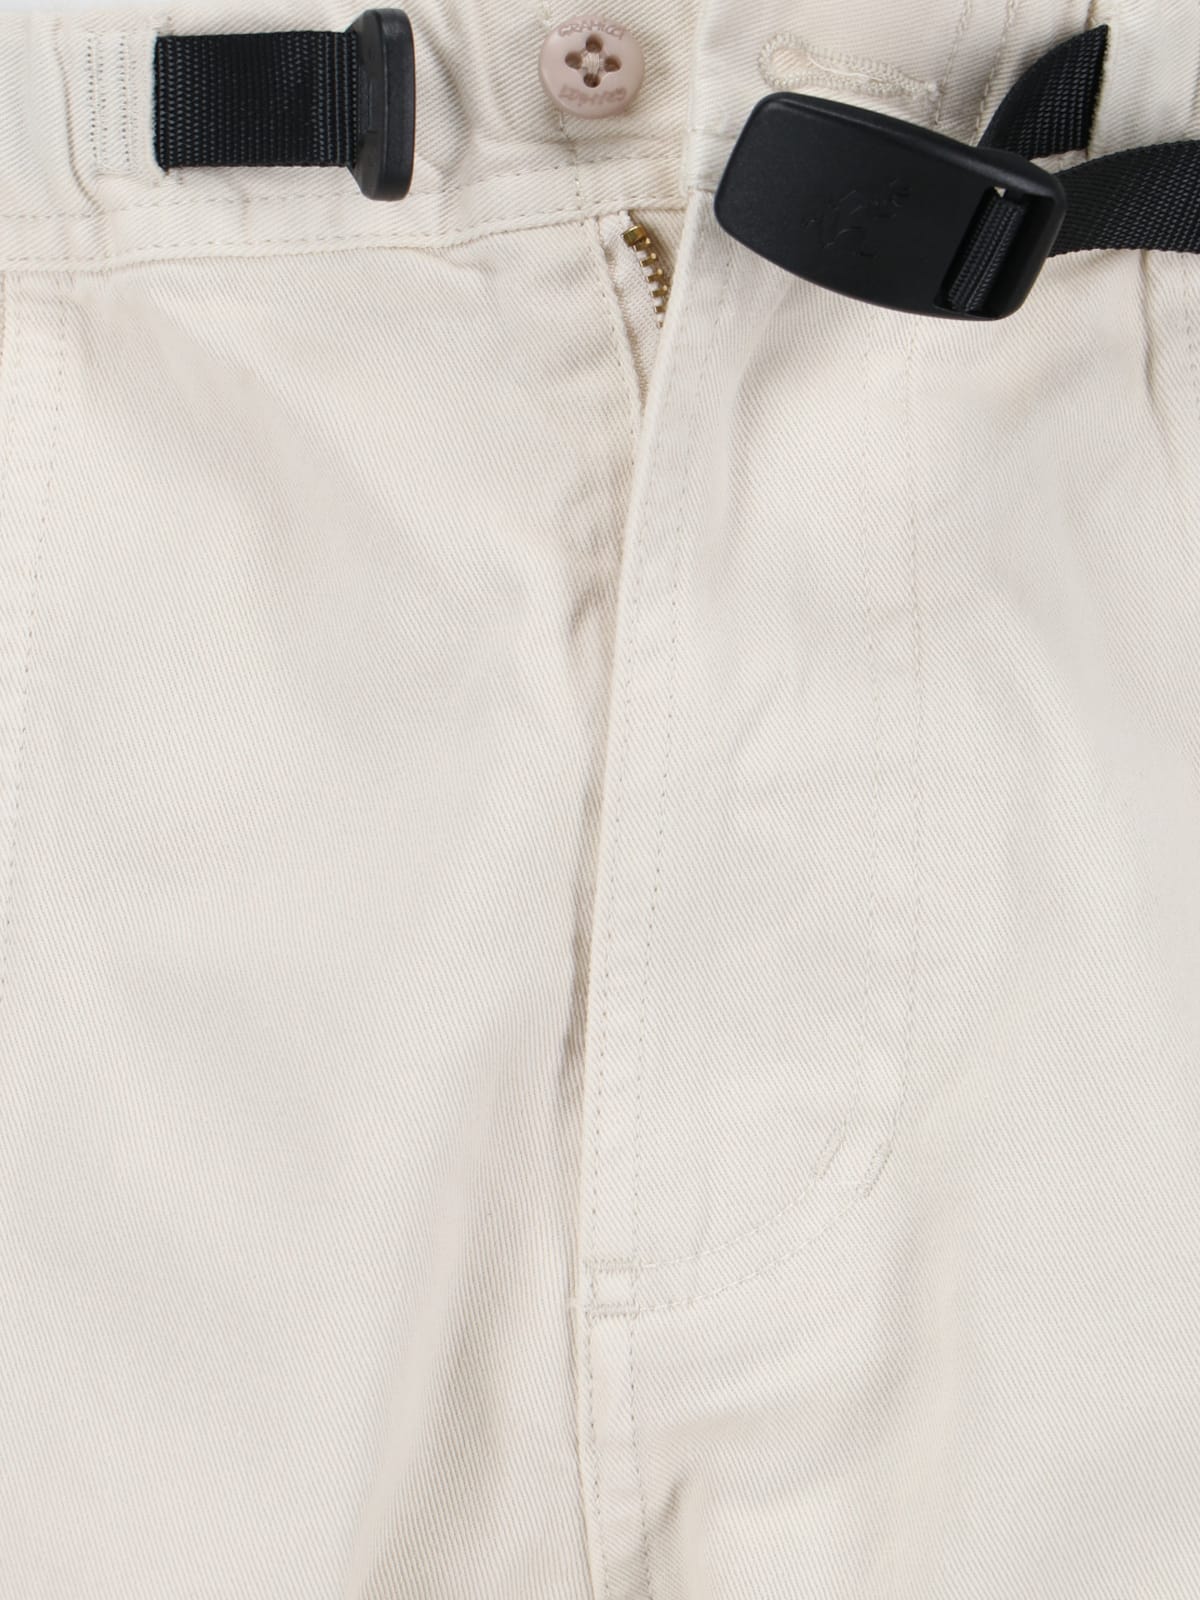 Shop Gramicci Gadget Shorts In Crema